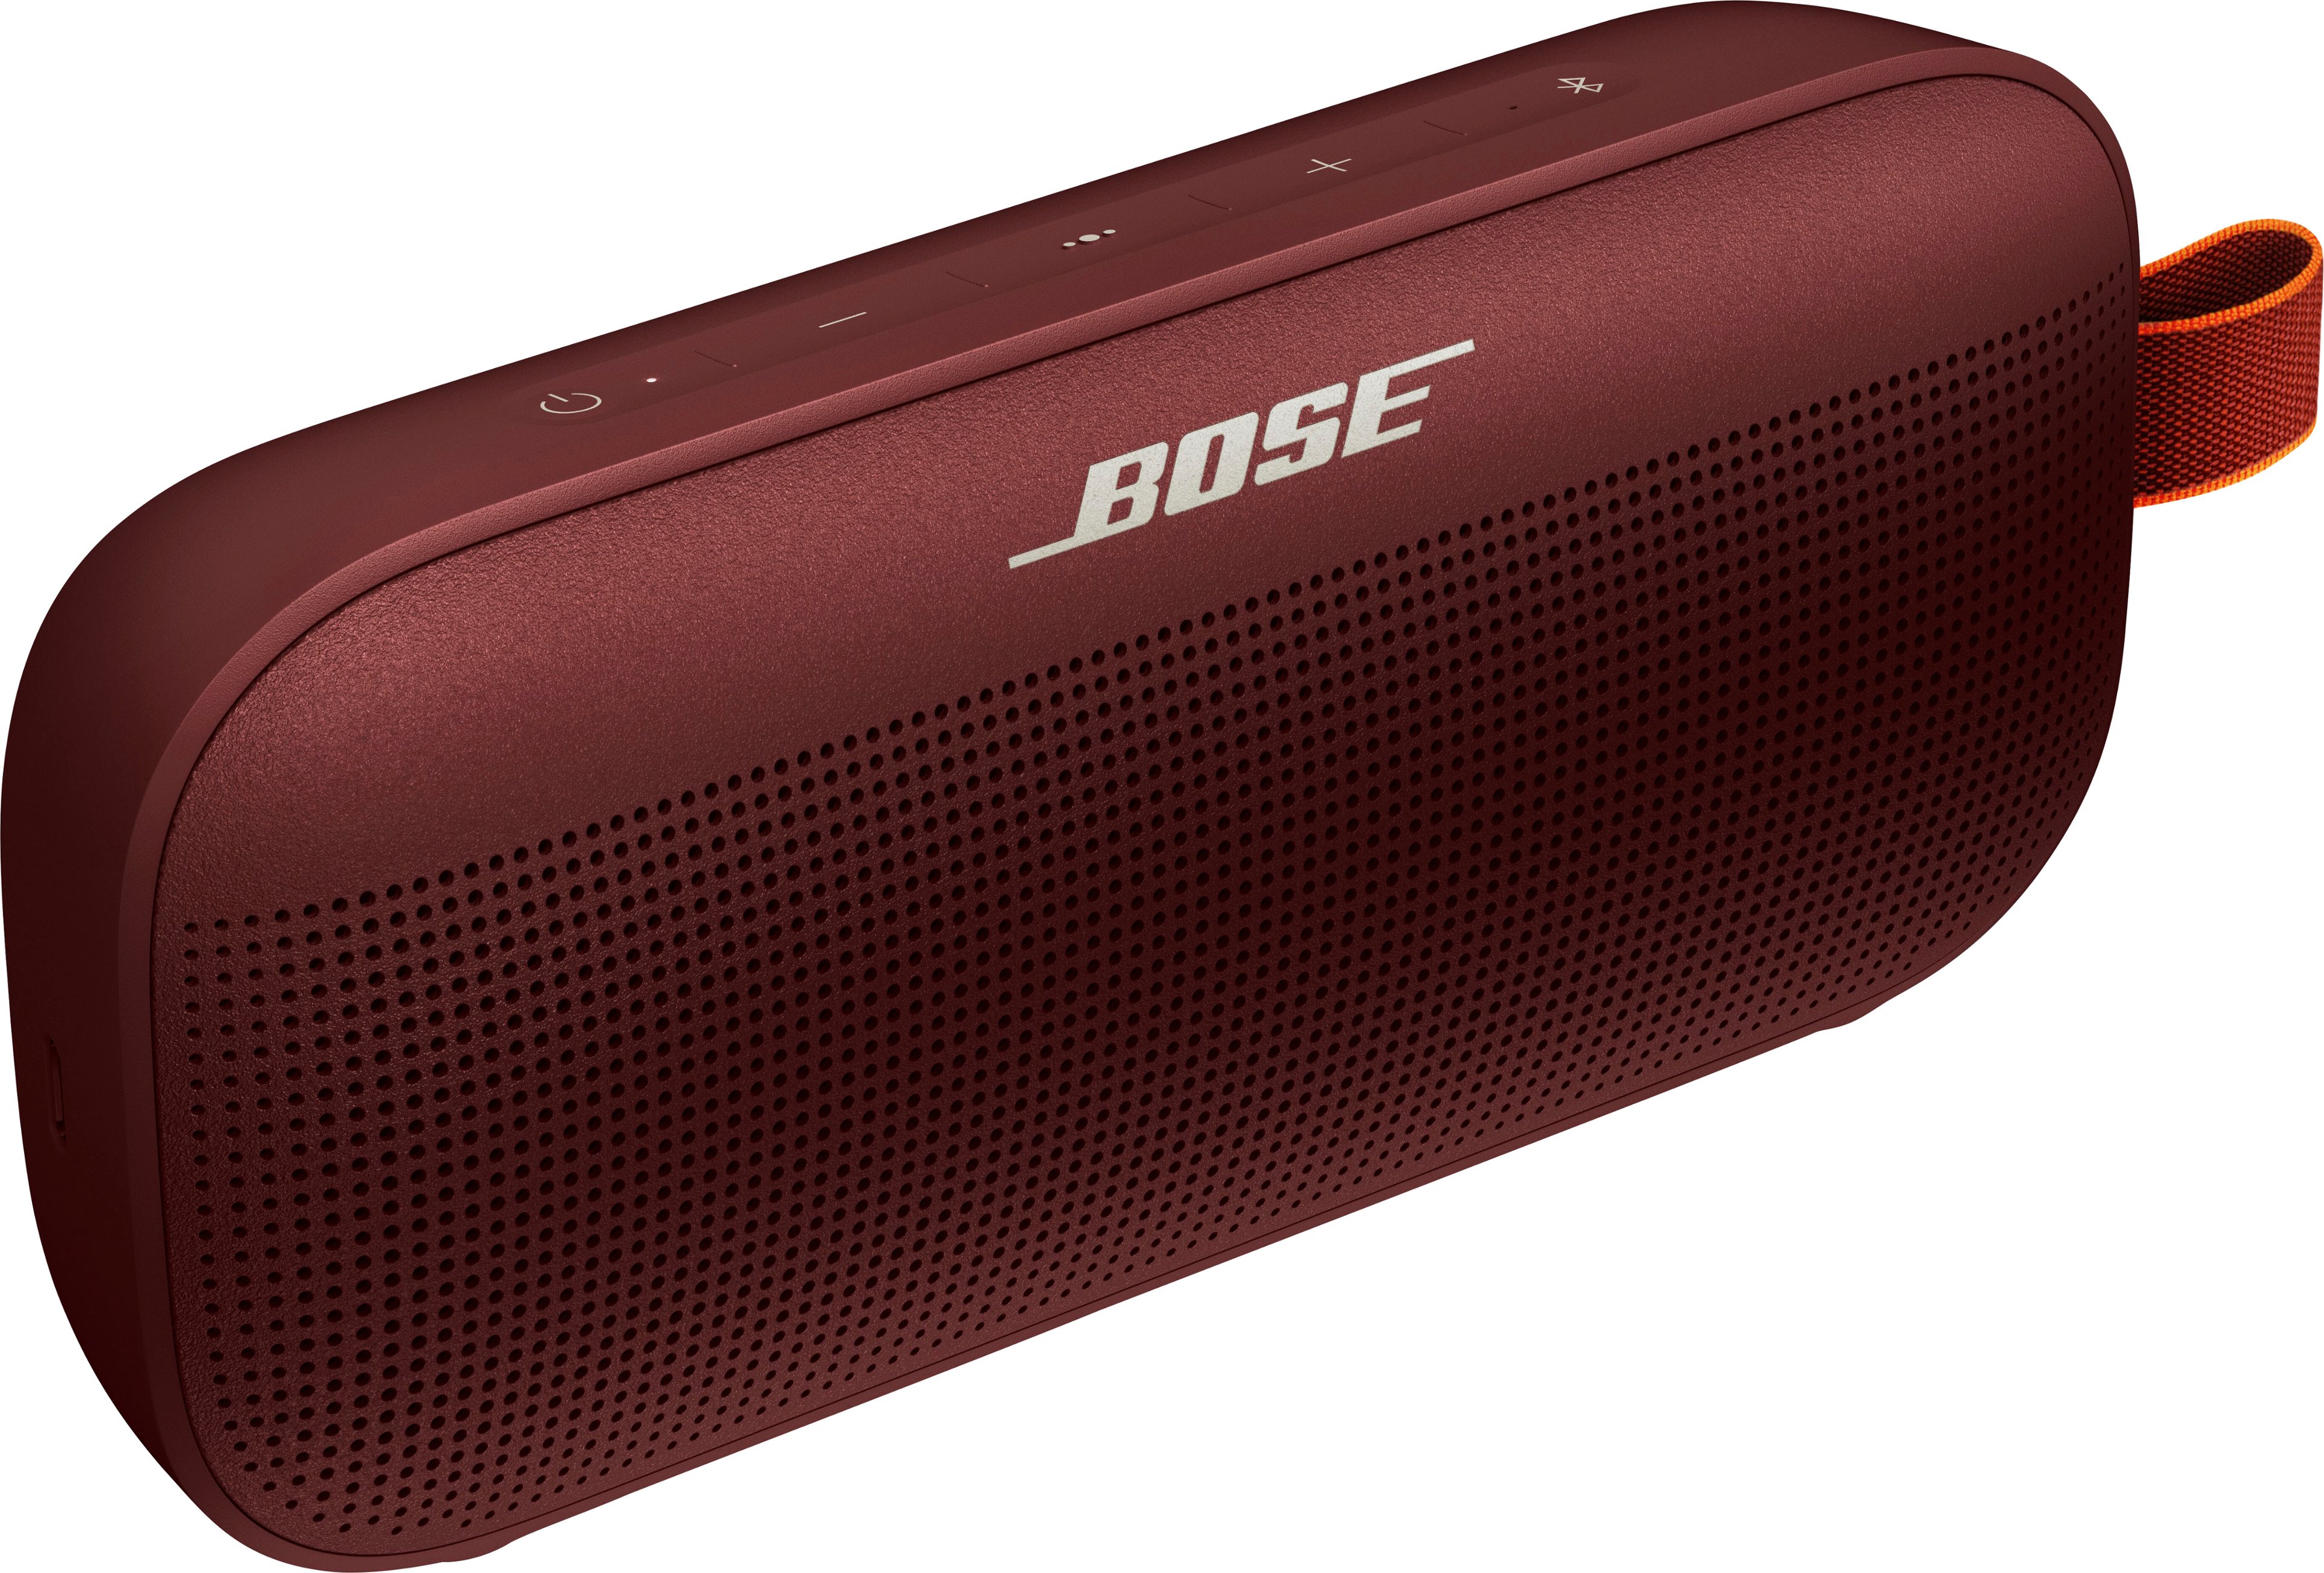 Bose SoundLink Flex Portable Bluetooth Speaker Waterproof/Dustproof Design Carmine Red 865983-0400 Buy